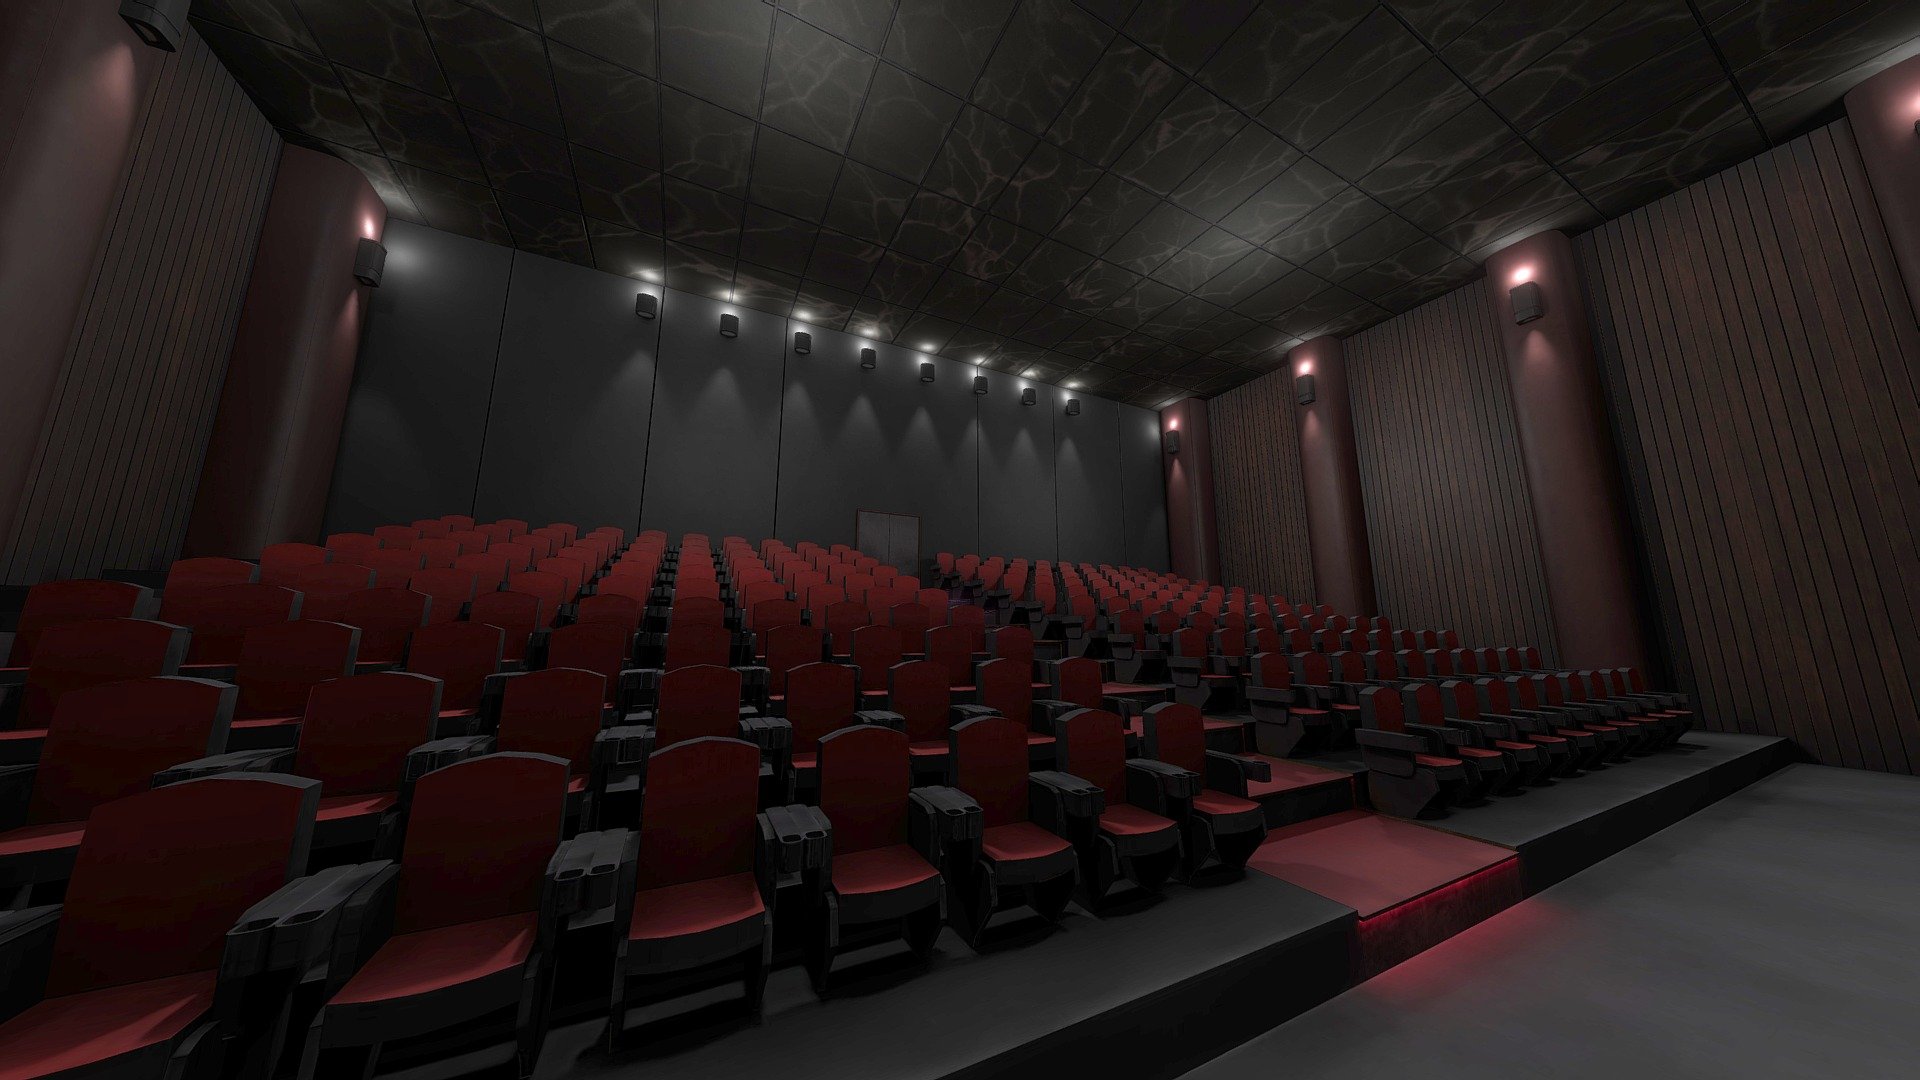 VR cinema modeled in Blender and textured in Substance Painter.

The scene has baked in lighting 3d model